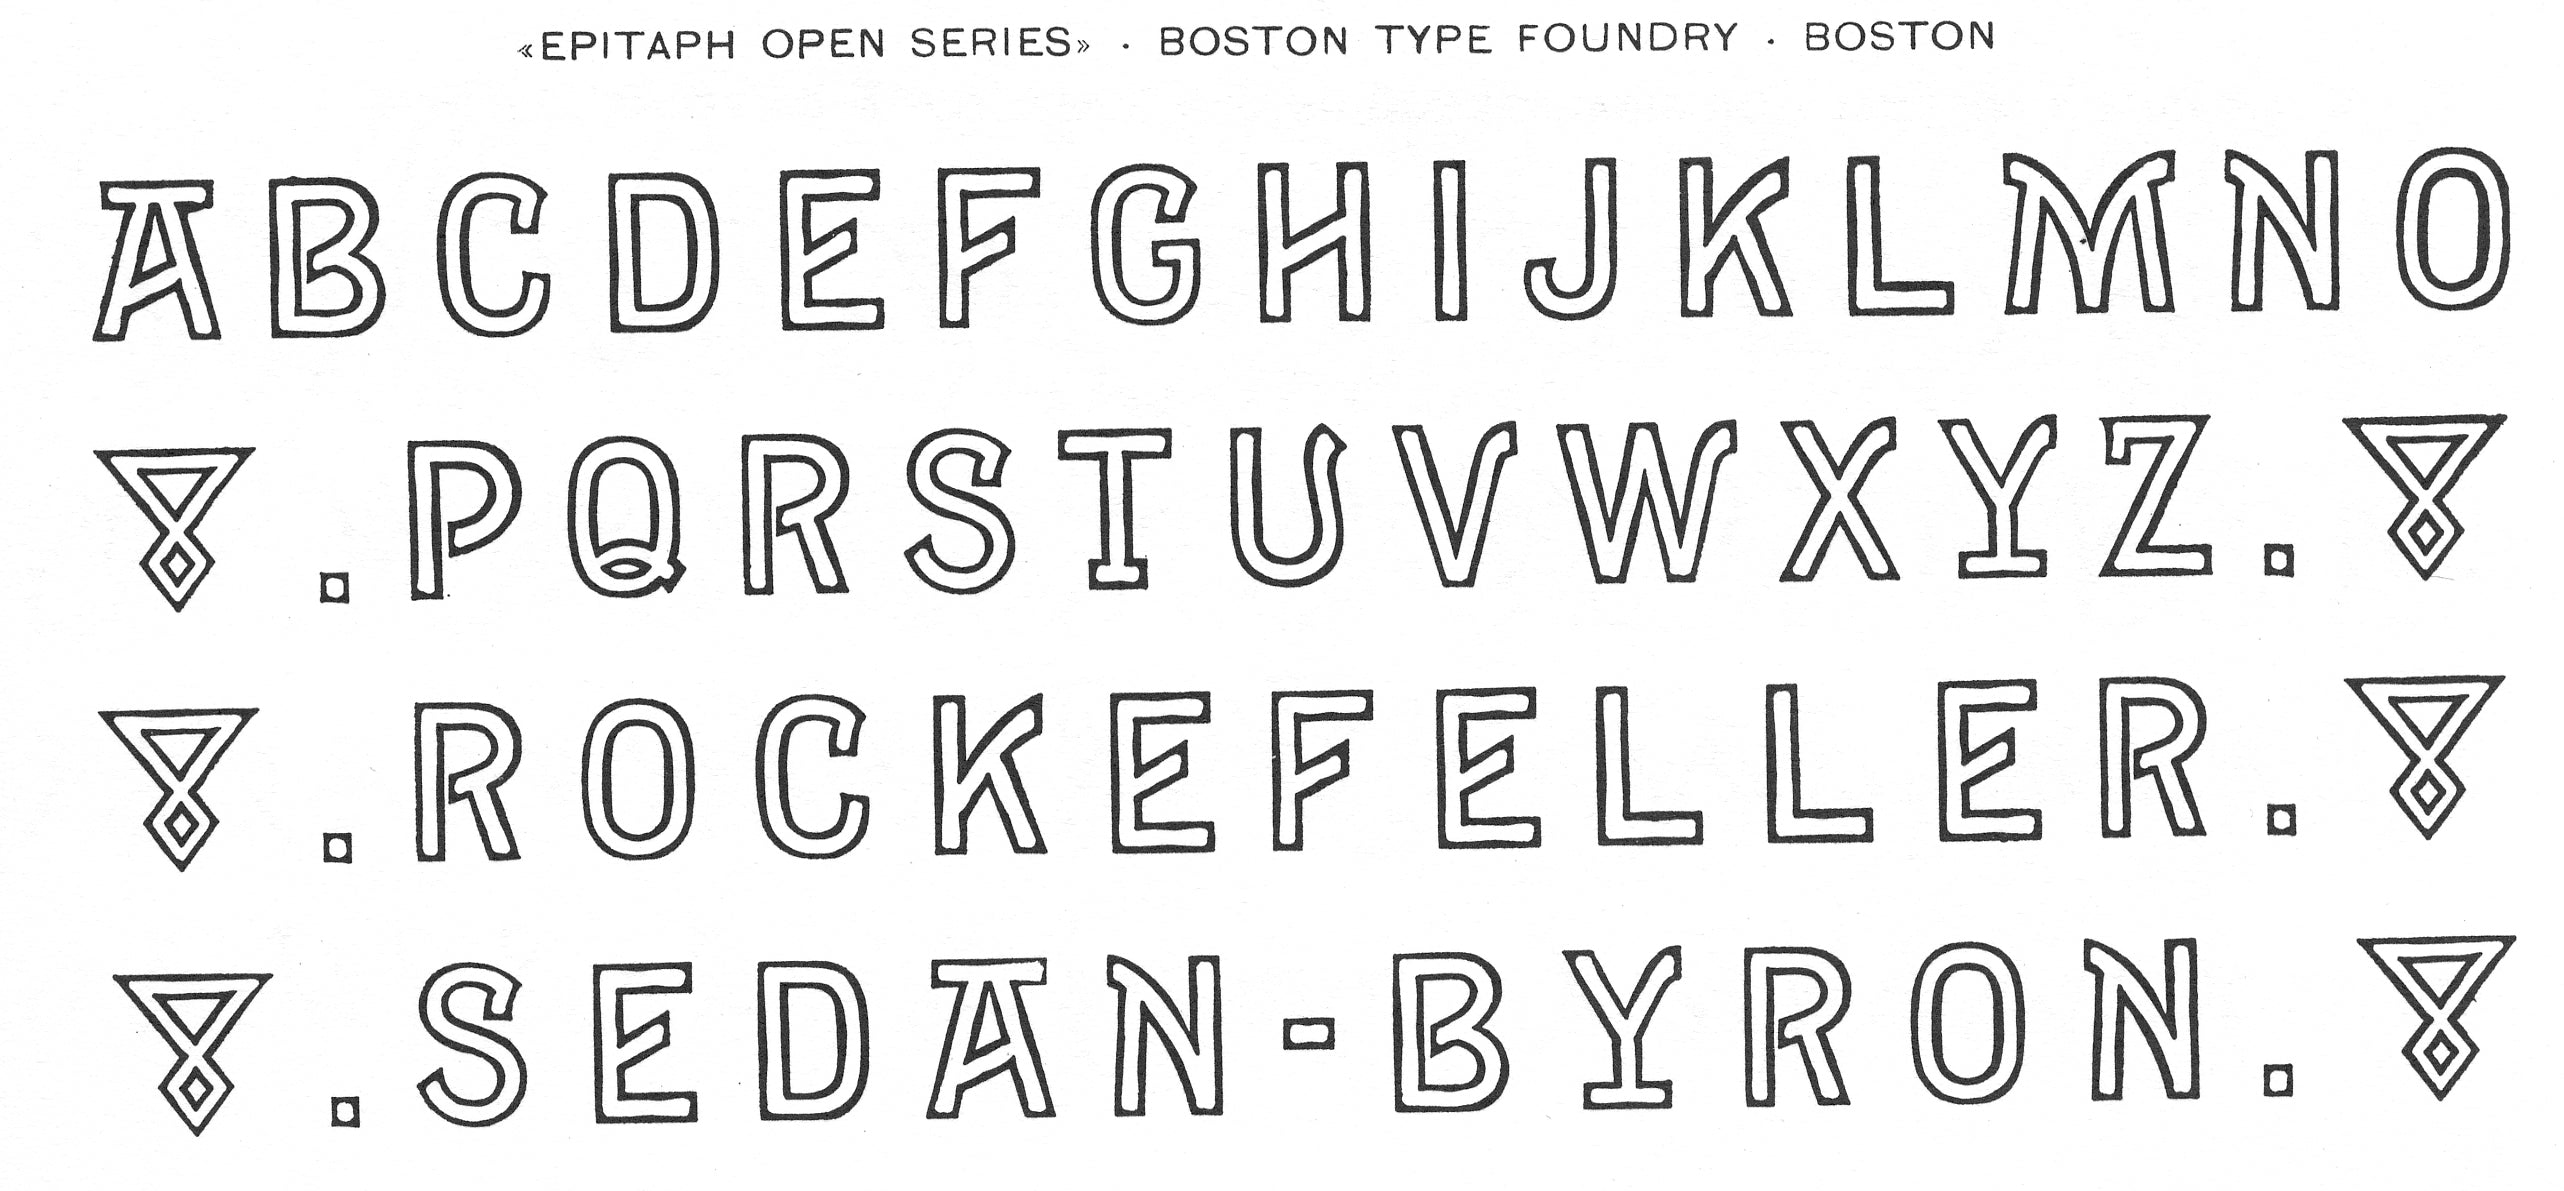 'Bromham' letterpress woodtype typeface